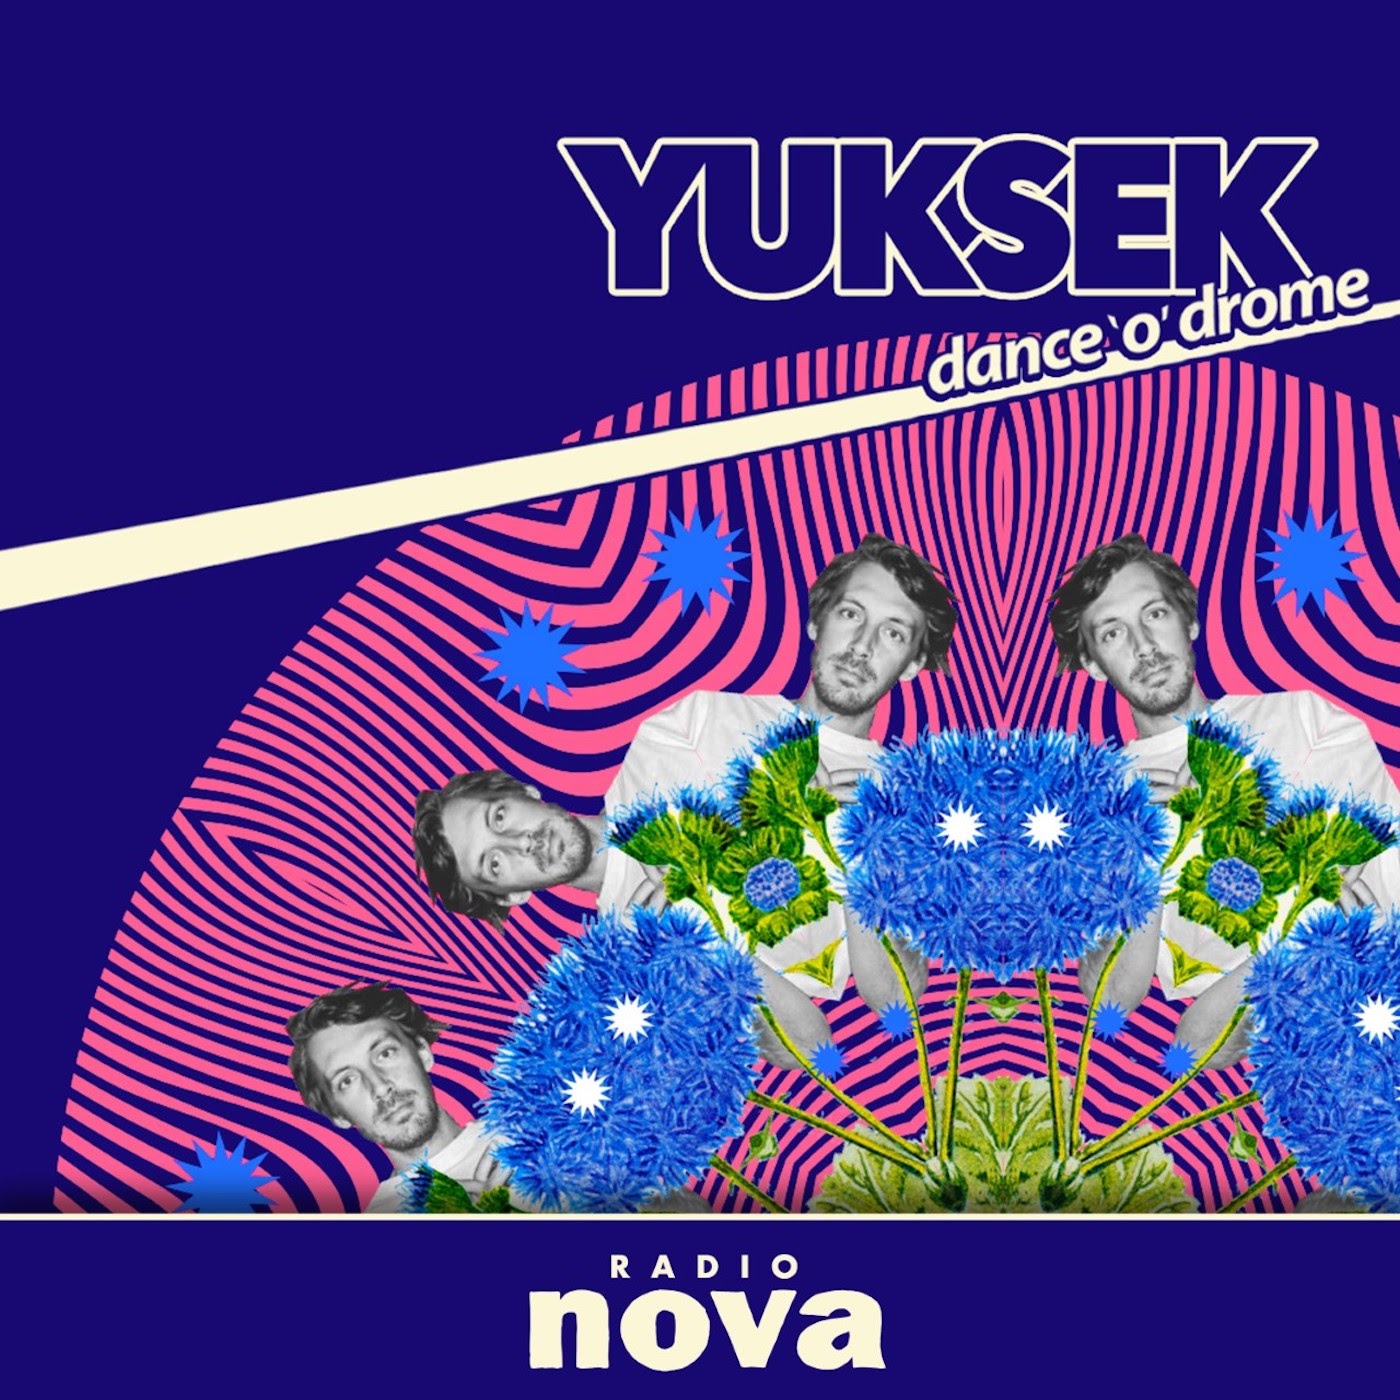 « Dance’o’drome » #25 : le mix de Yuksek, avec Eli Escobar, sur Radio Nova